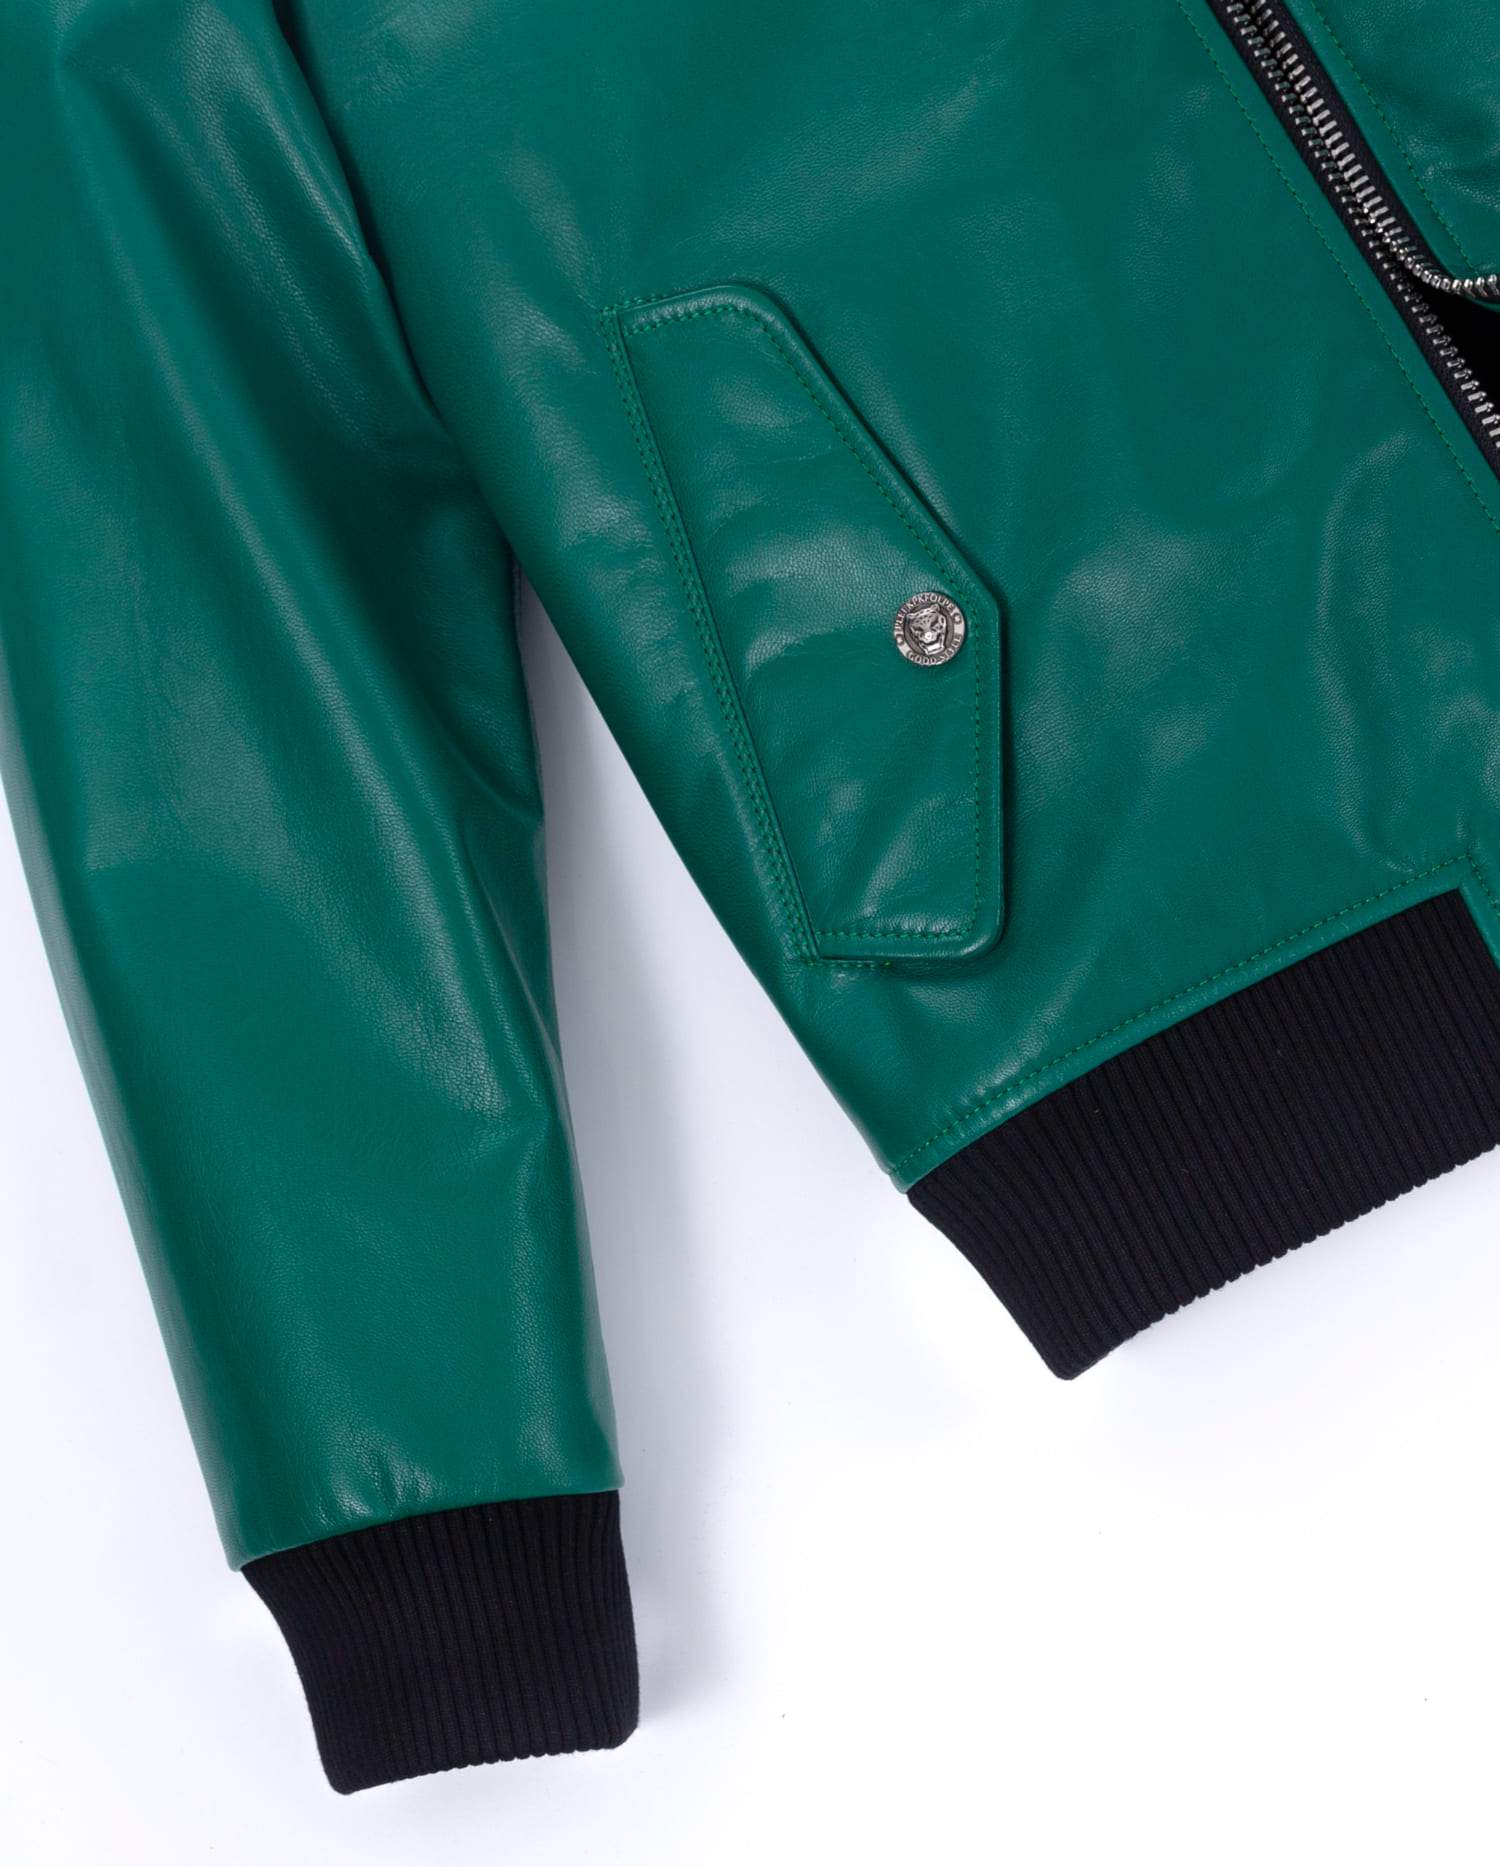 Lambskin Simple Clean Designed Genuine Leather Bomber Jacket